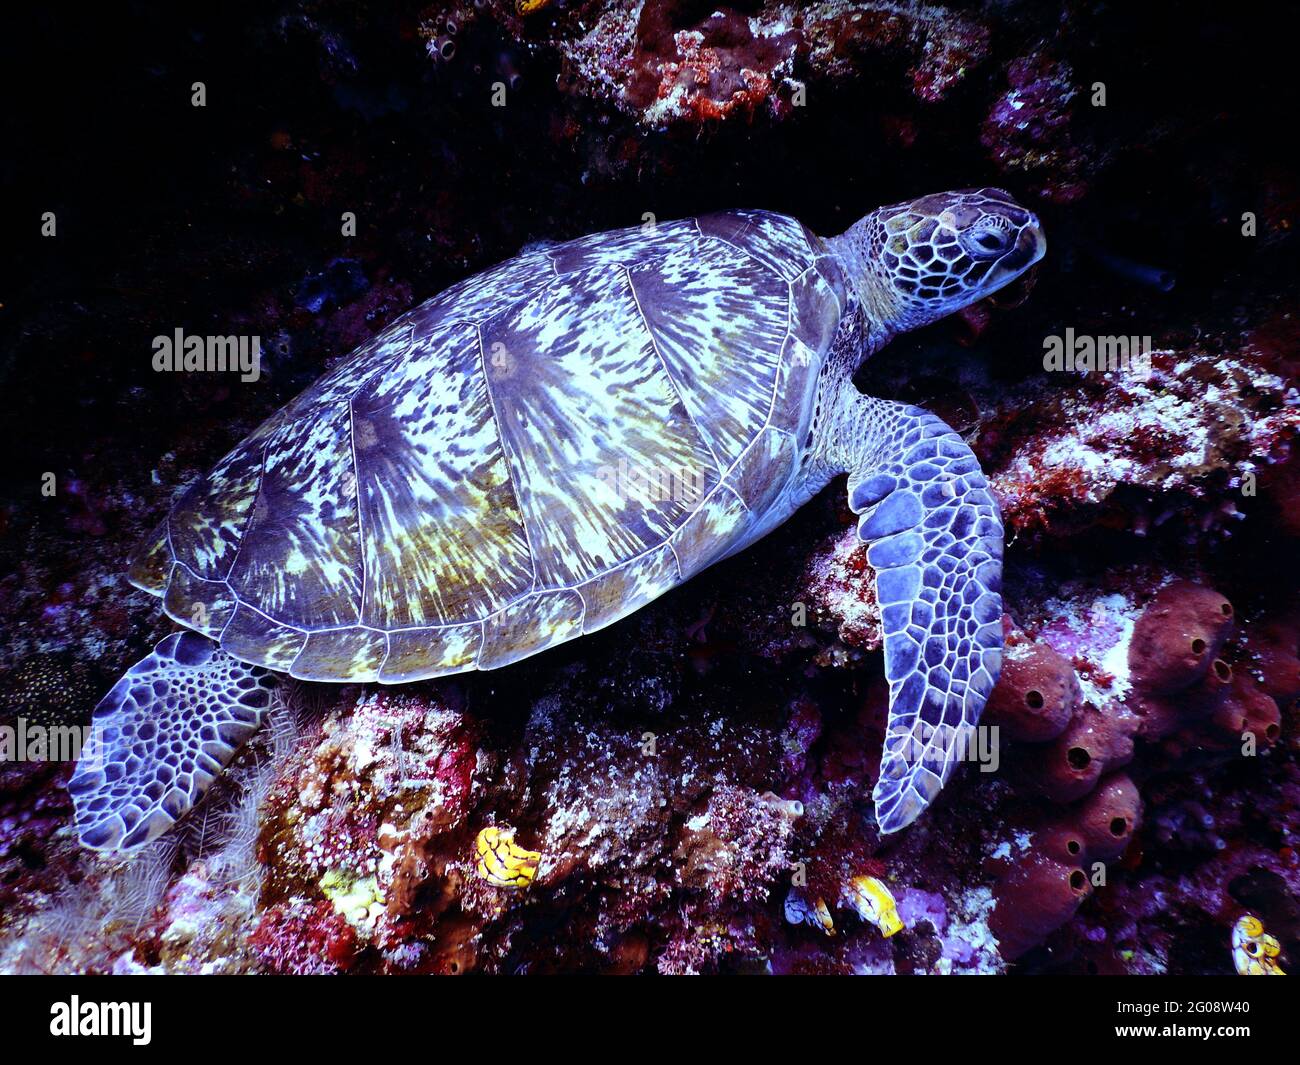 Sea Turtle, Marine Life Turtle, Live Animal Stock Photograph, Africa, wildlife, Turtle Stock Photo, animal, animals Stock Photo